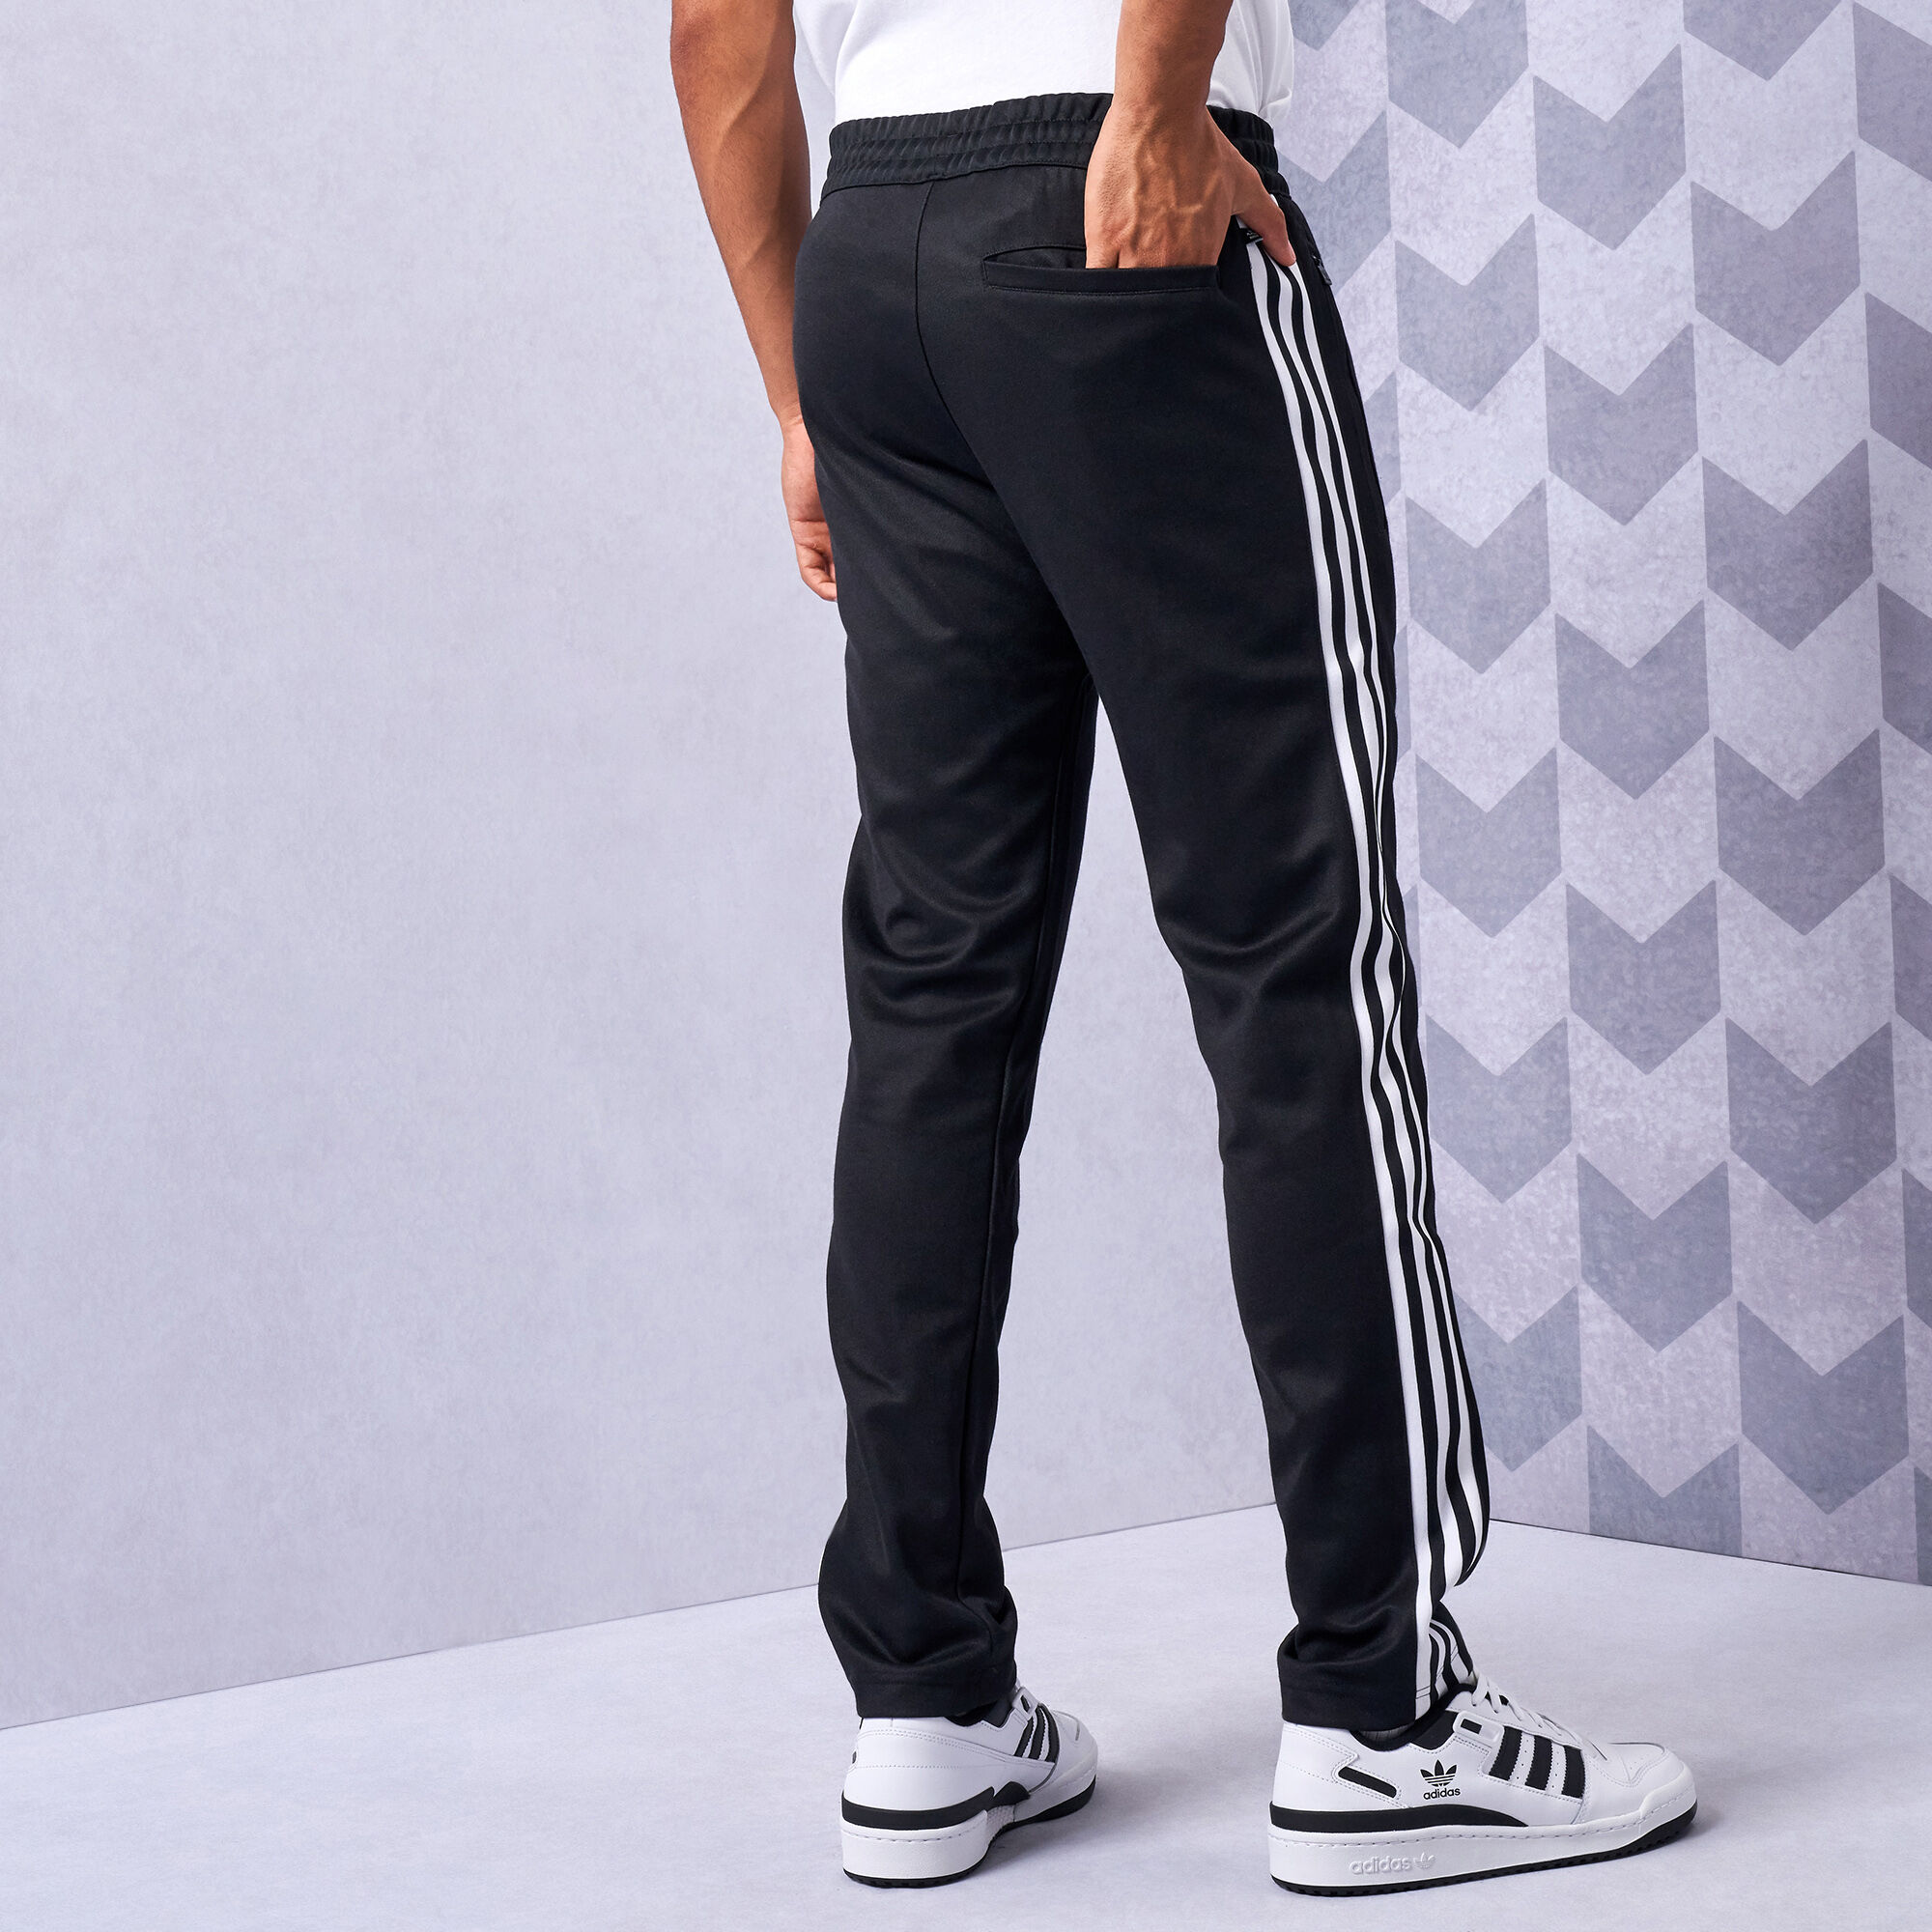 adidas Originals Men's Franz Beckenbauer Track Pants